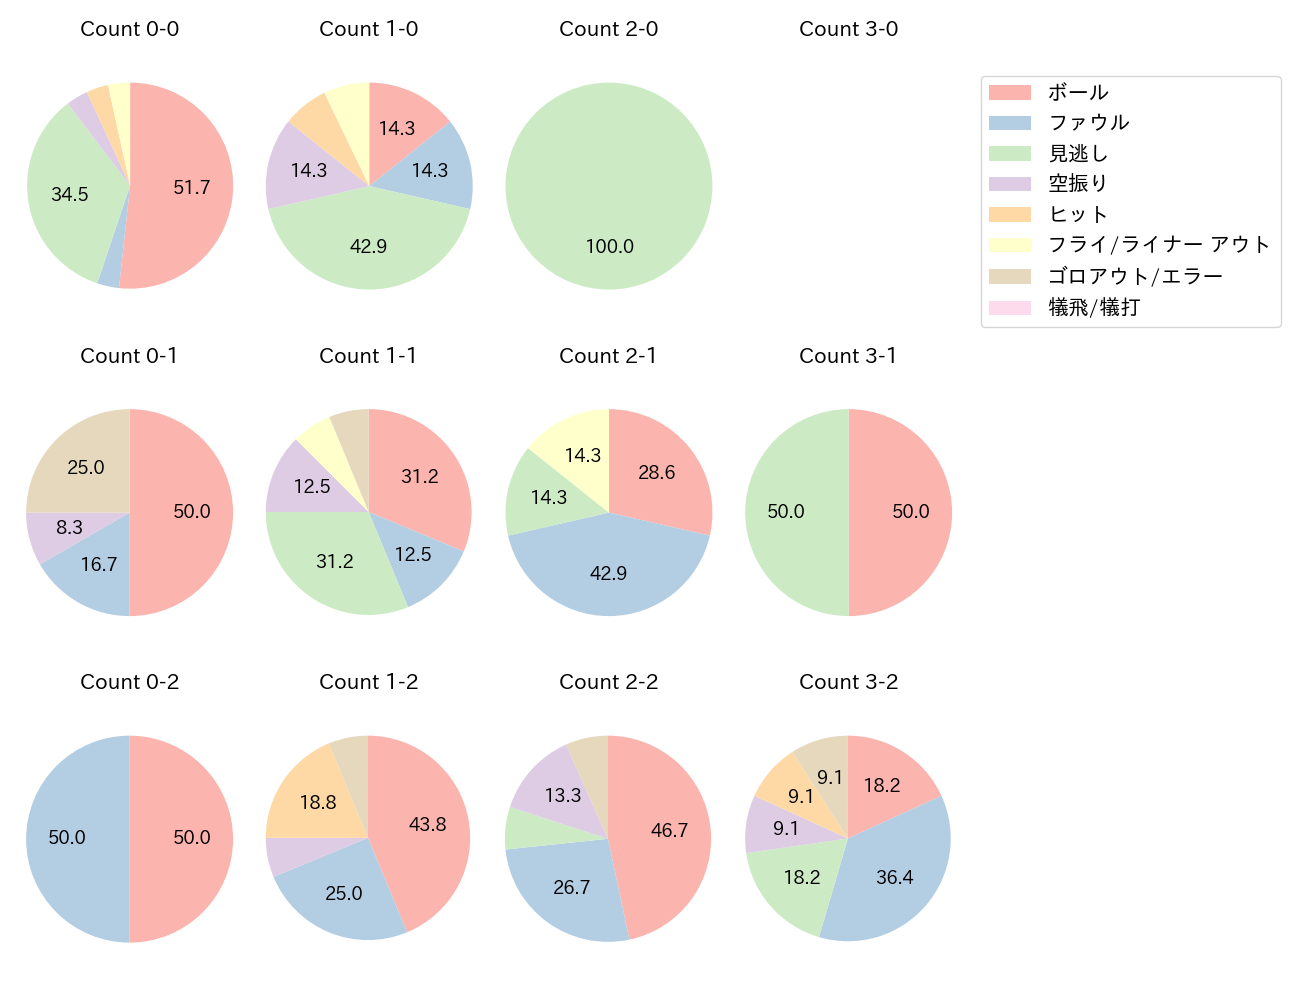 安田 悠馬の球数分布(2023年5月)